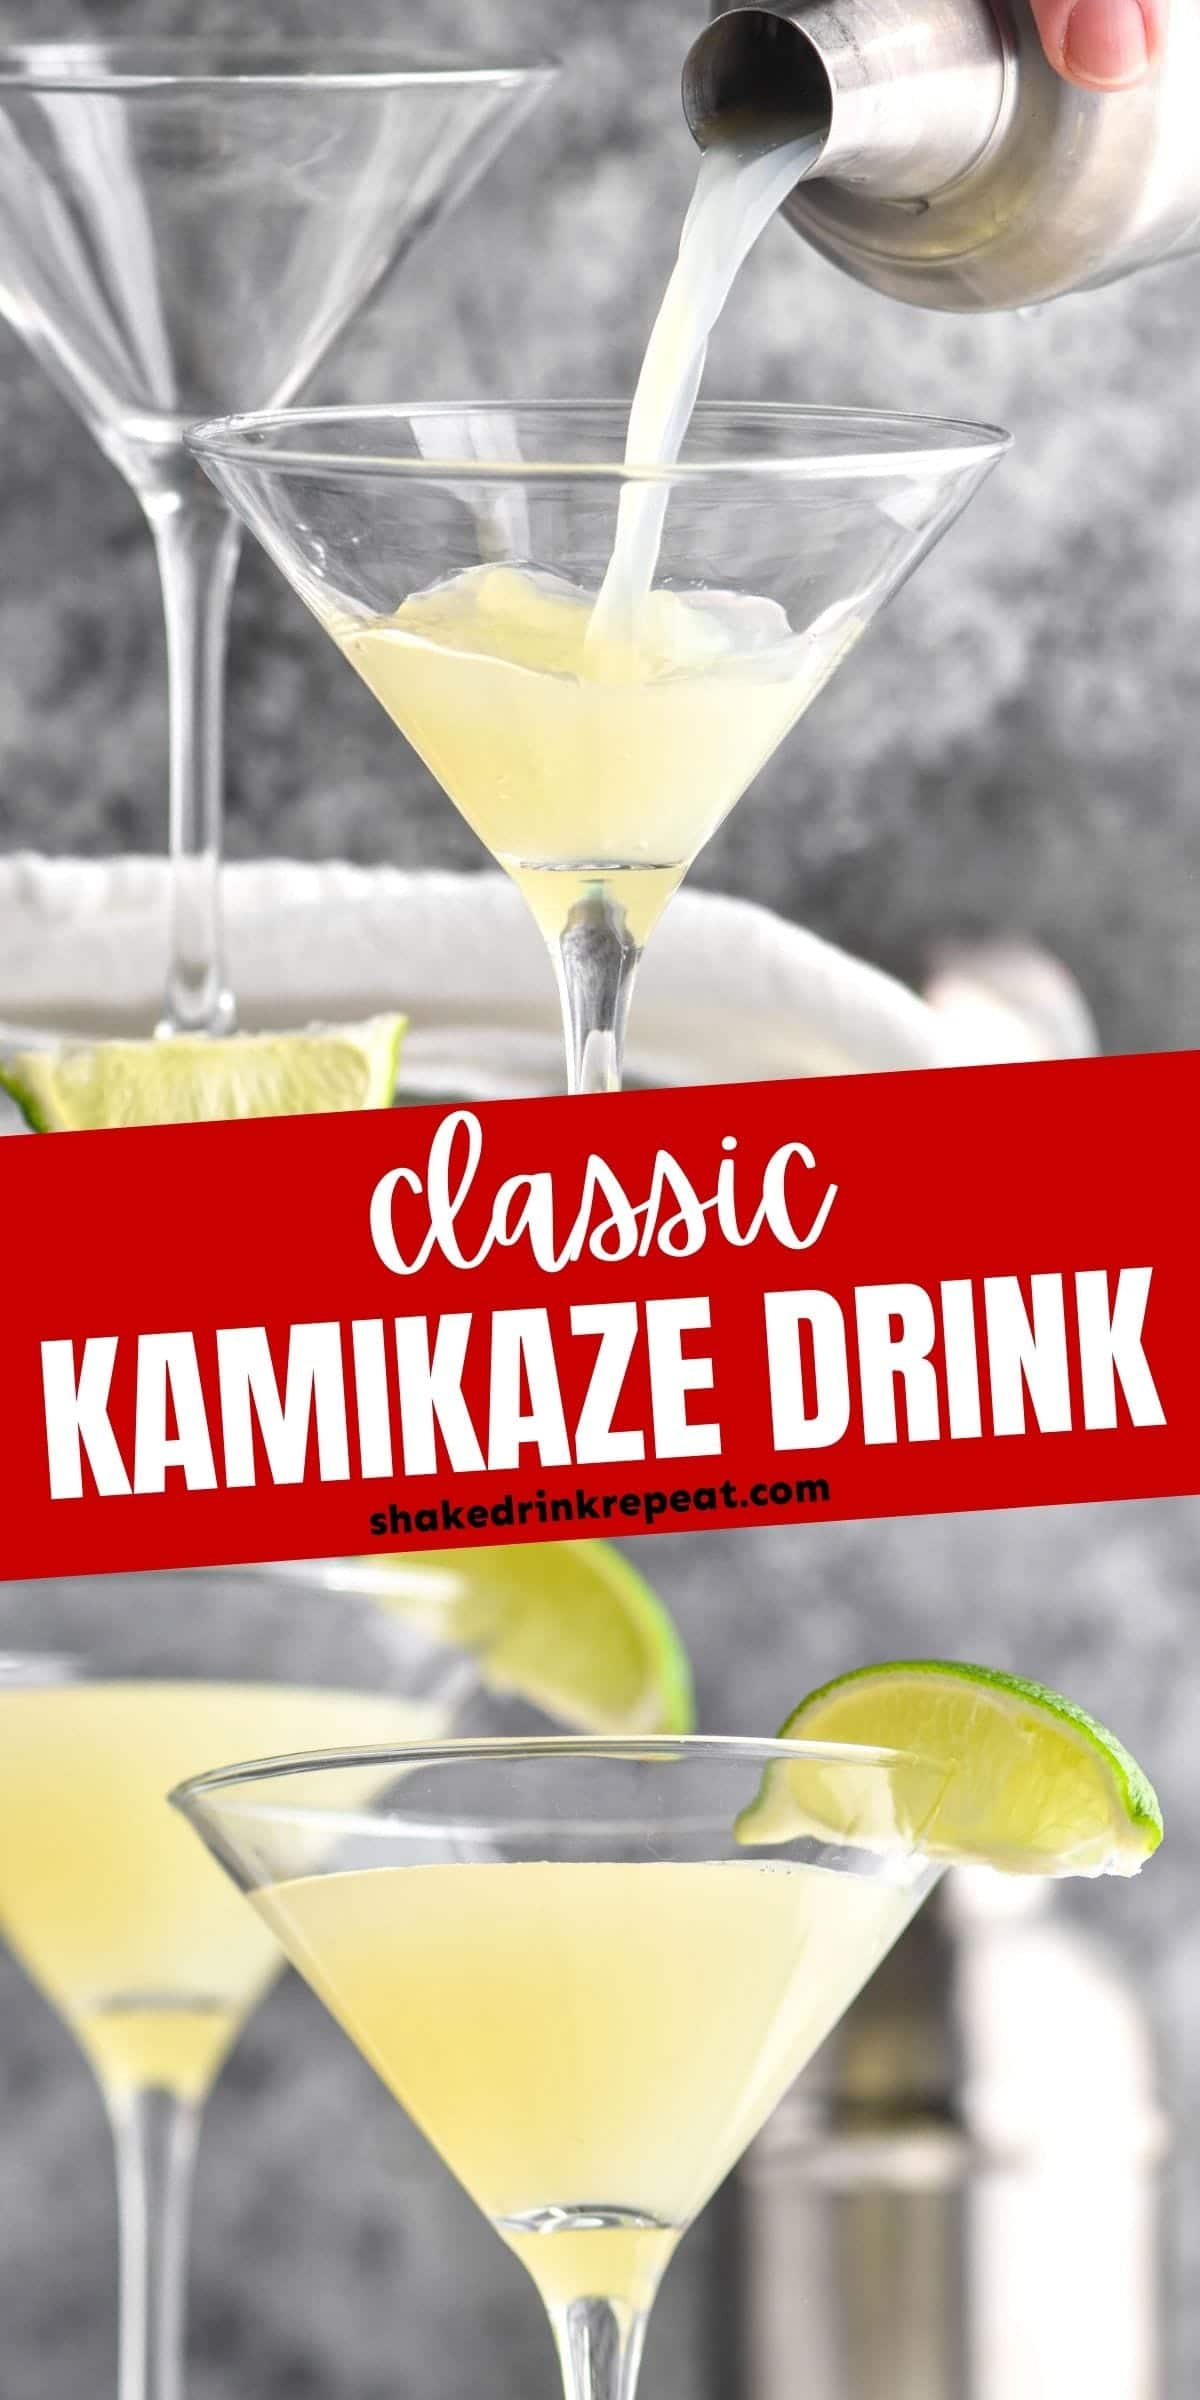 Kamikaze Drink - Shake Drink Repeat